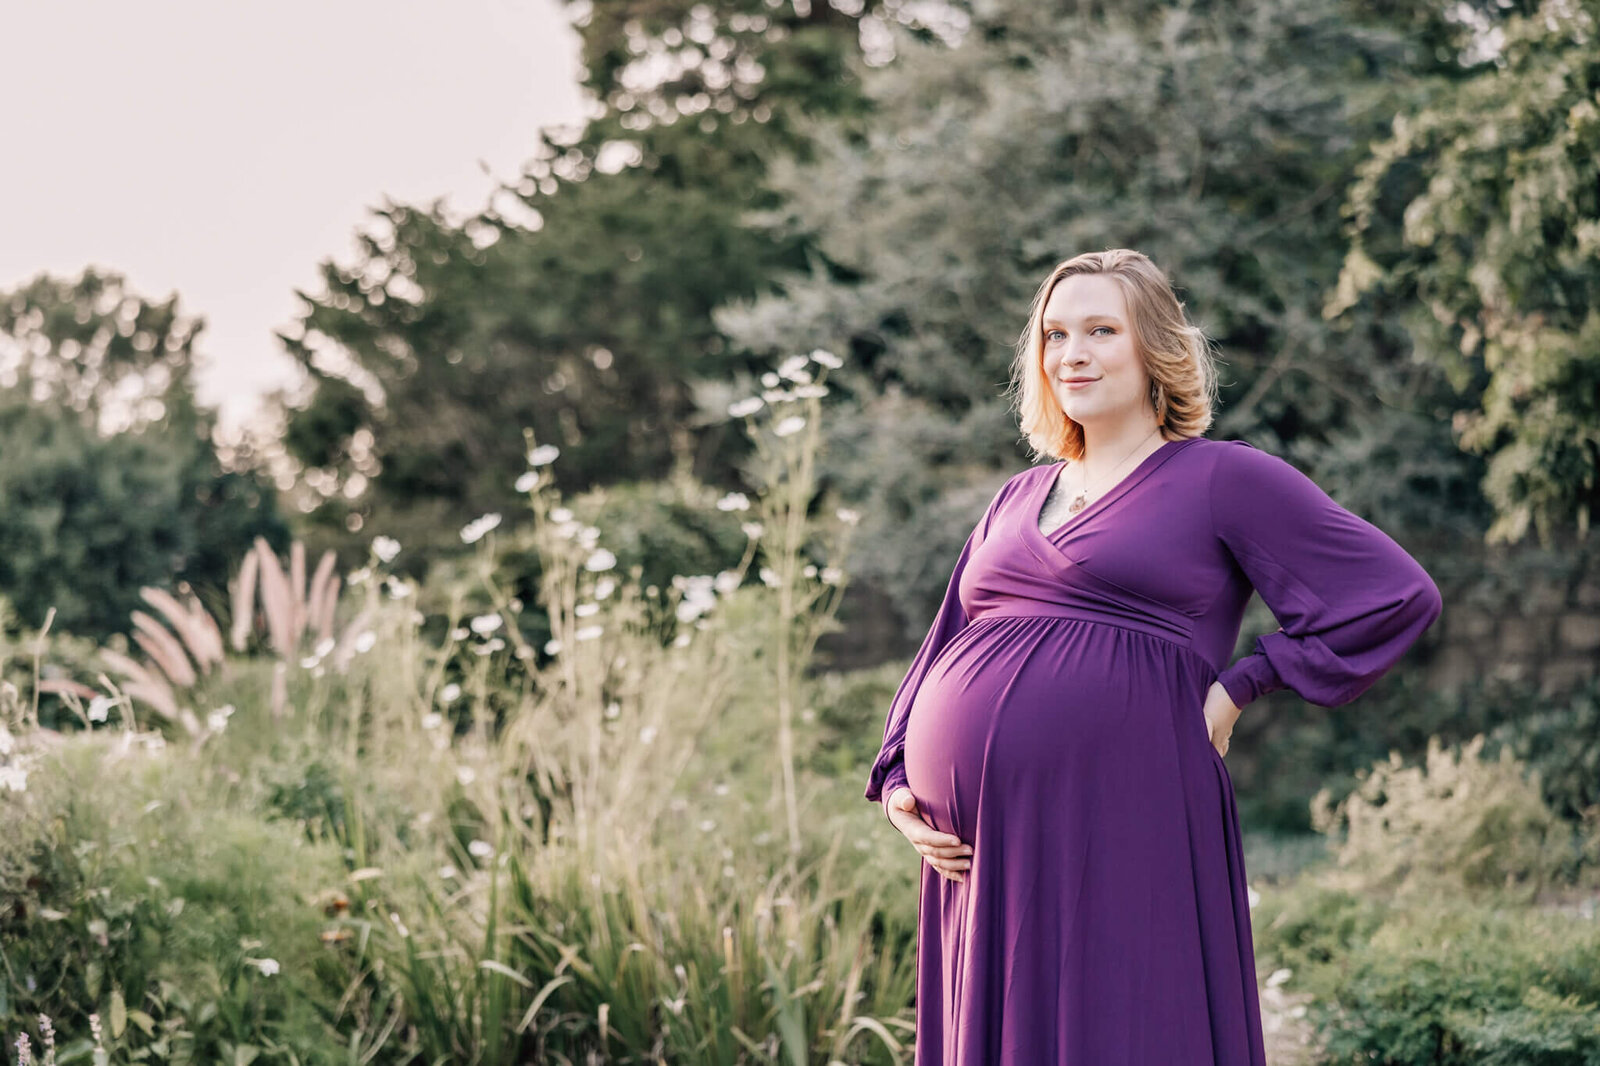 Pregnant woman holds belly in purple dress in flower garden